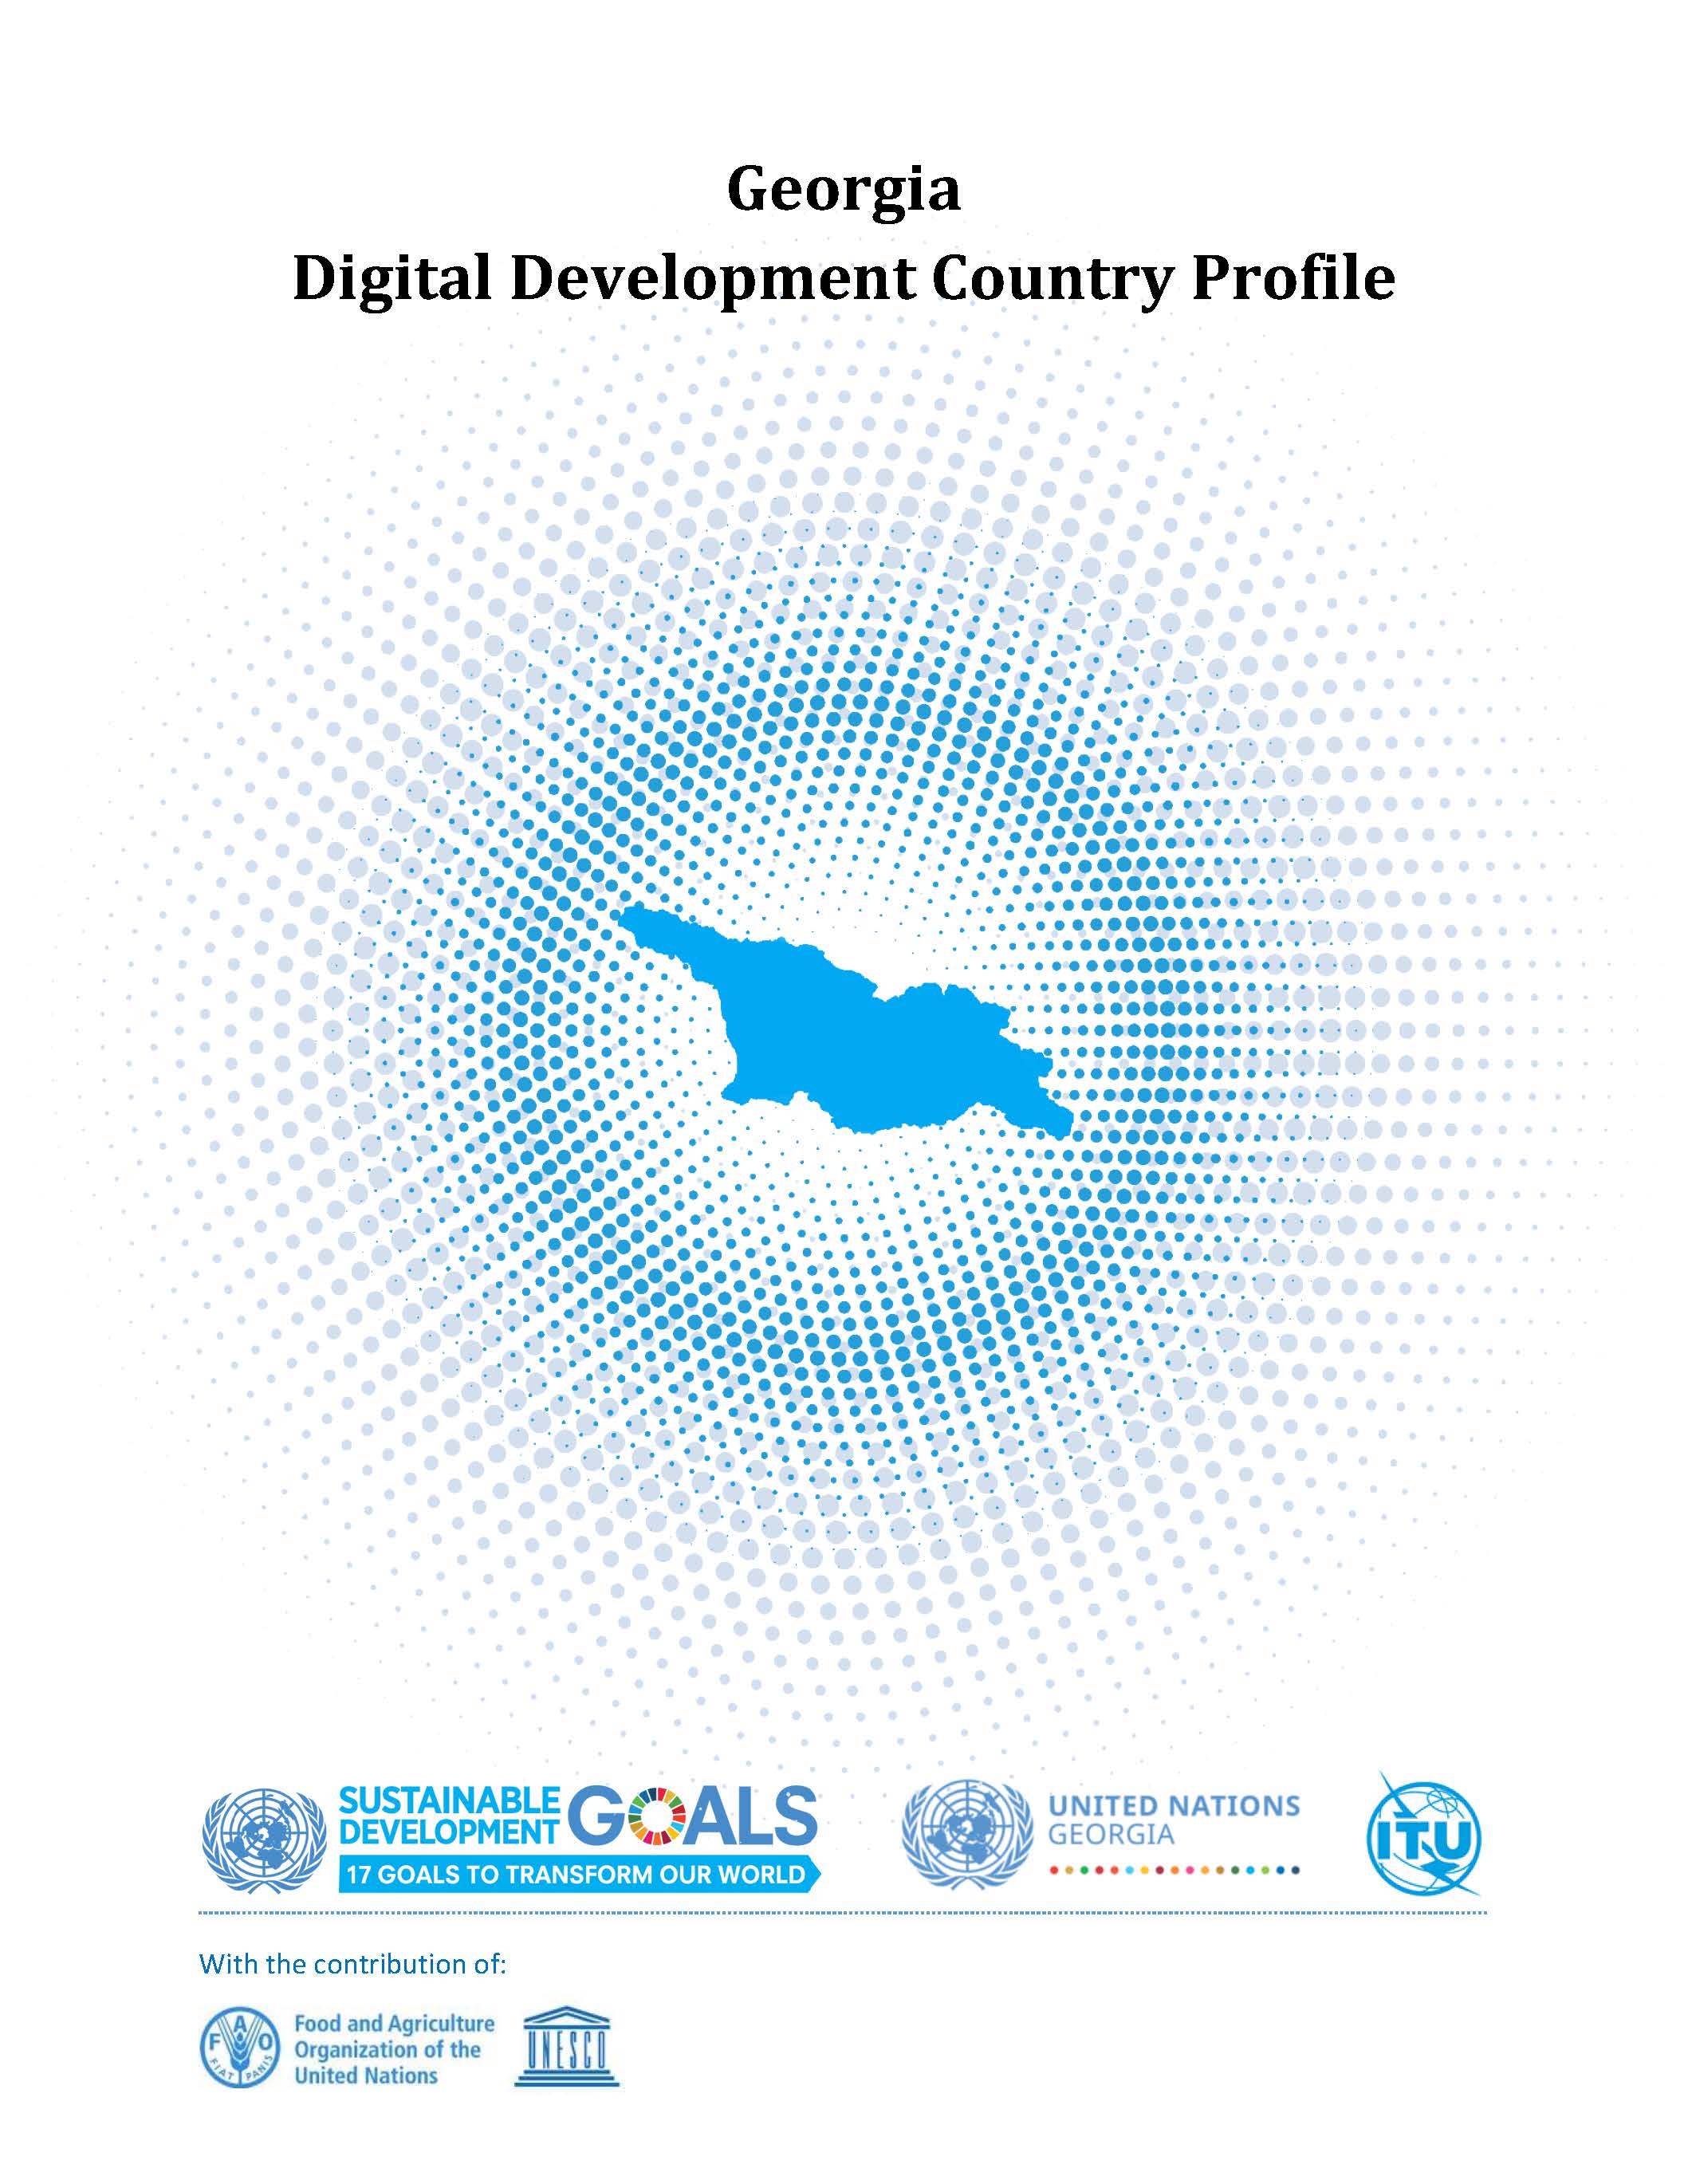 Digital Development Country Profile - Georgia